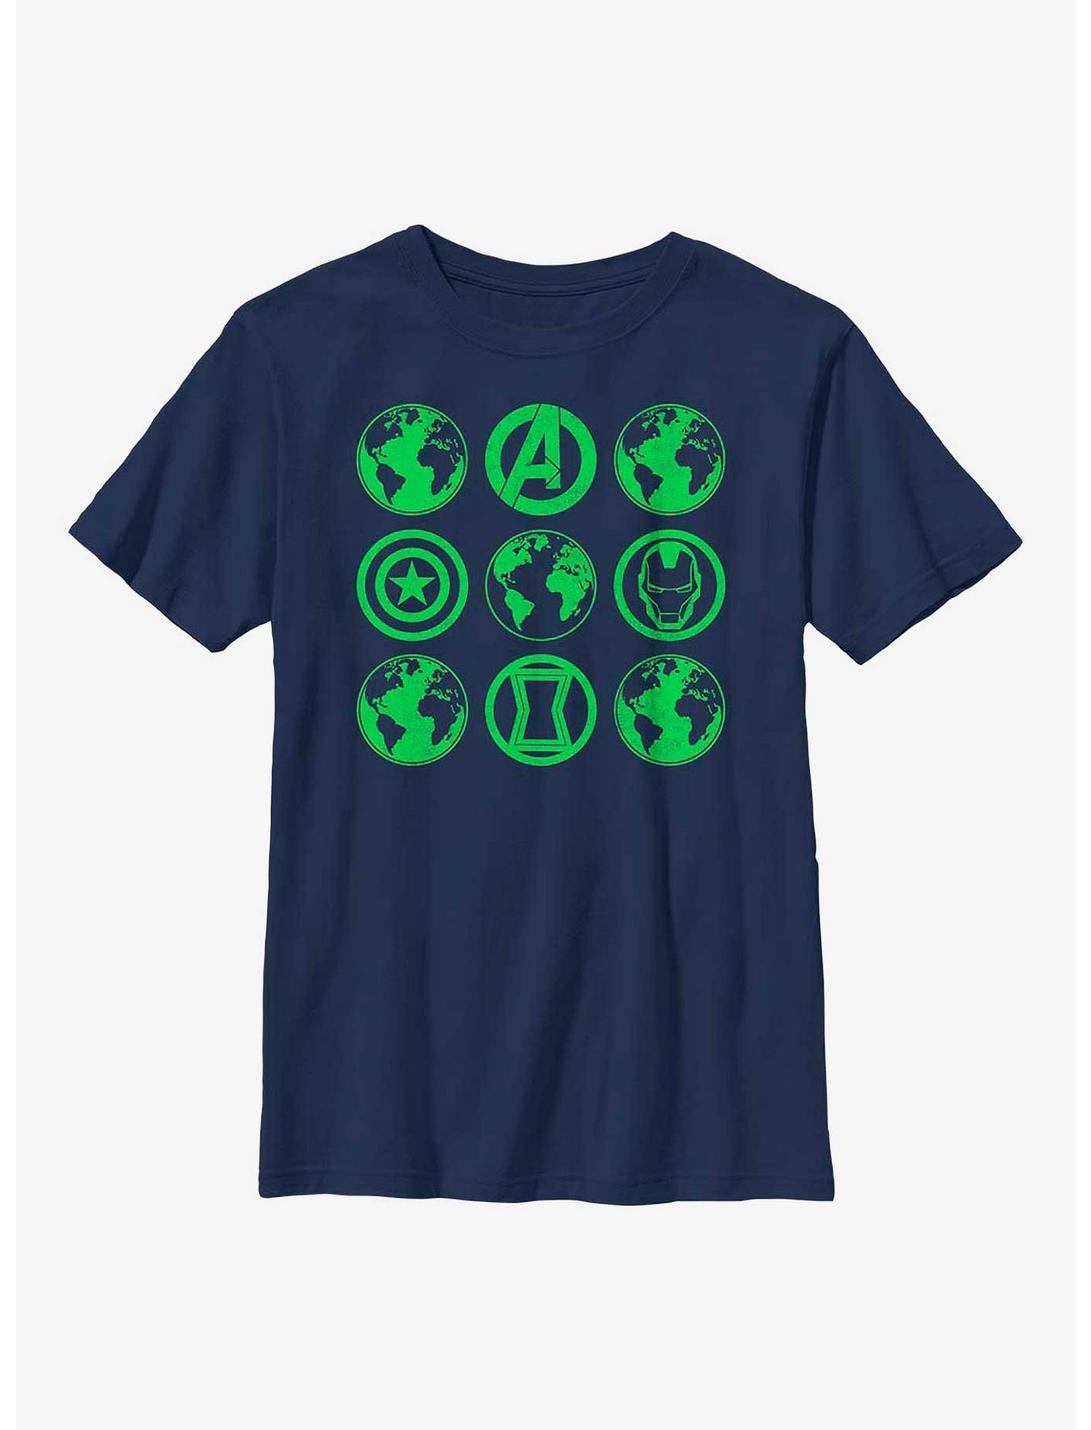 Marvel Avengers Avengers Green Globes Youth T-Shirt, NAVY, hi-res